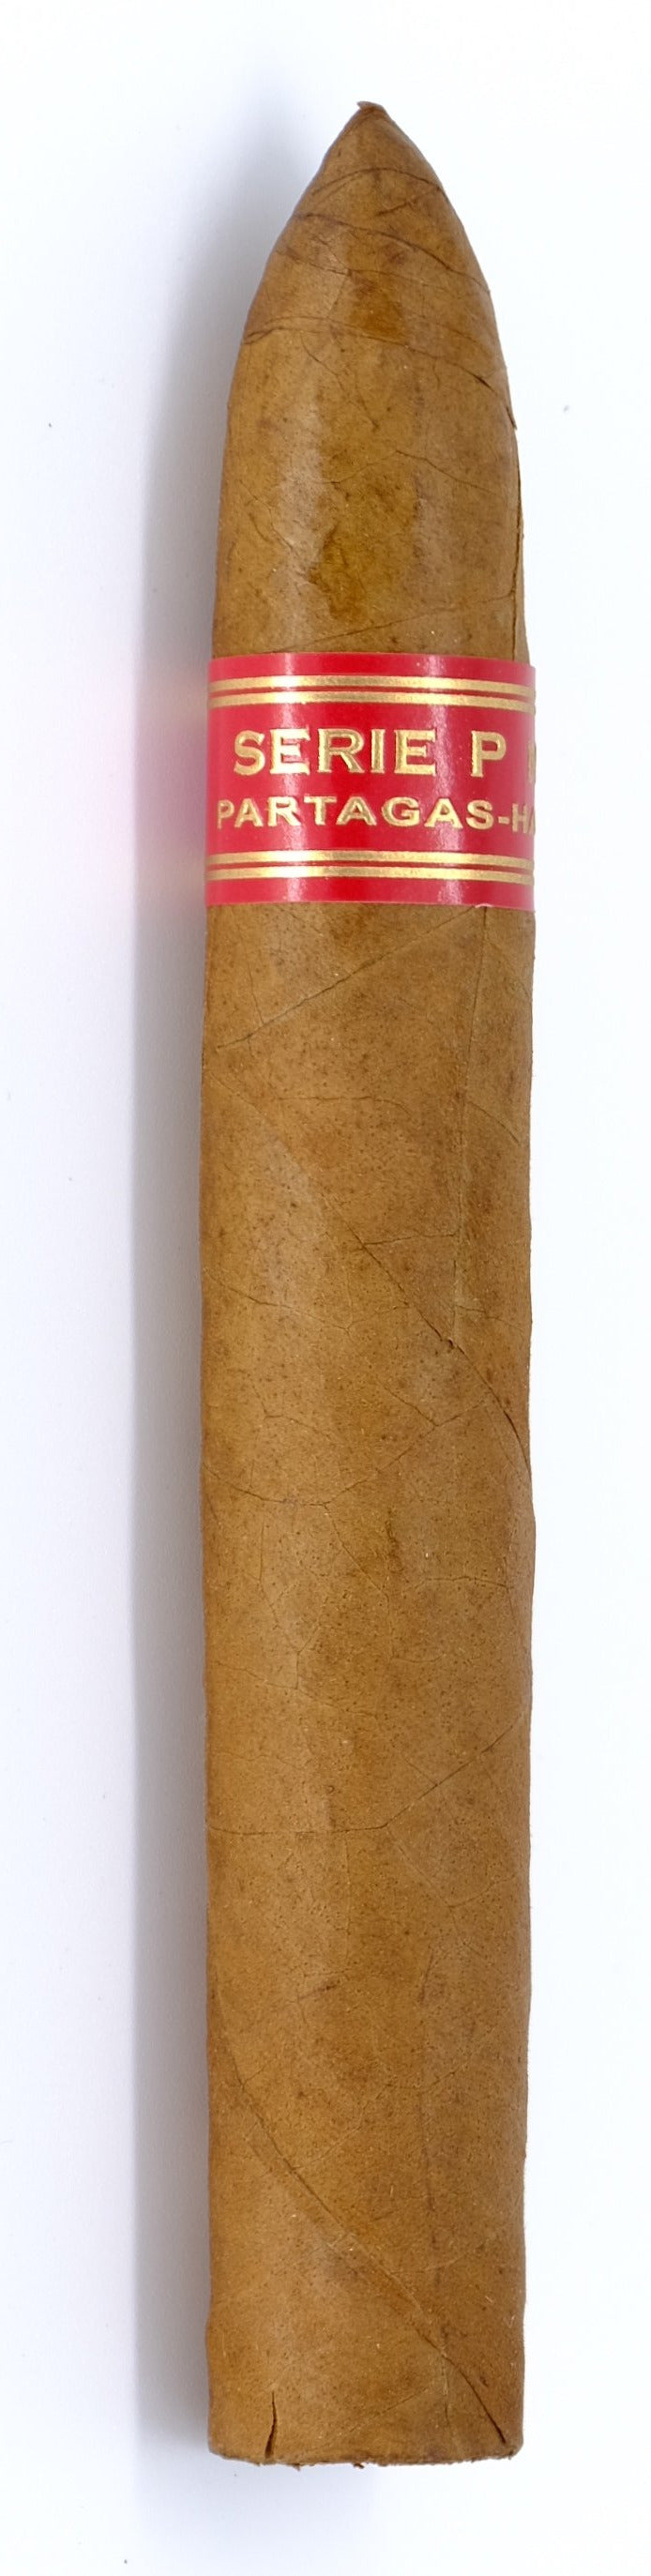 Partagas Serie P No 2 Zigarre